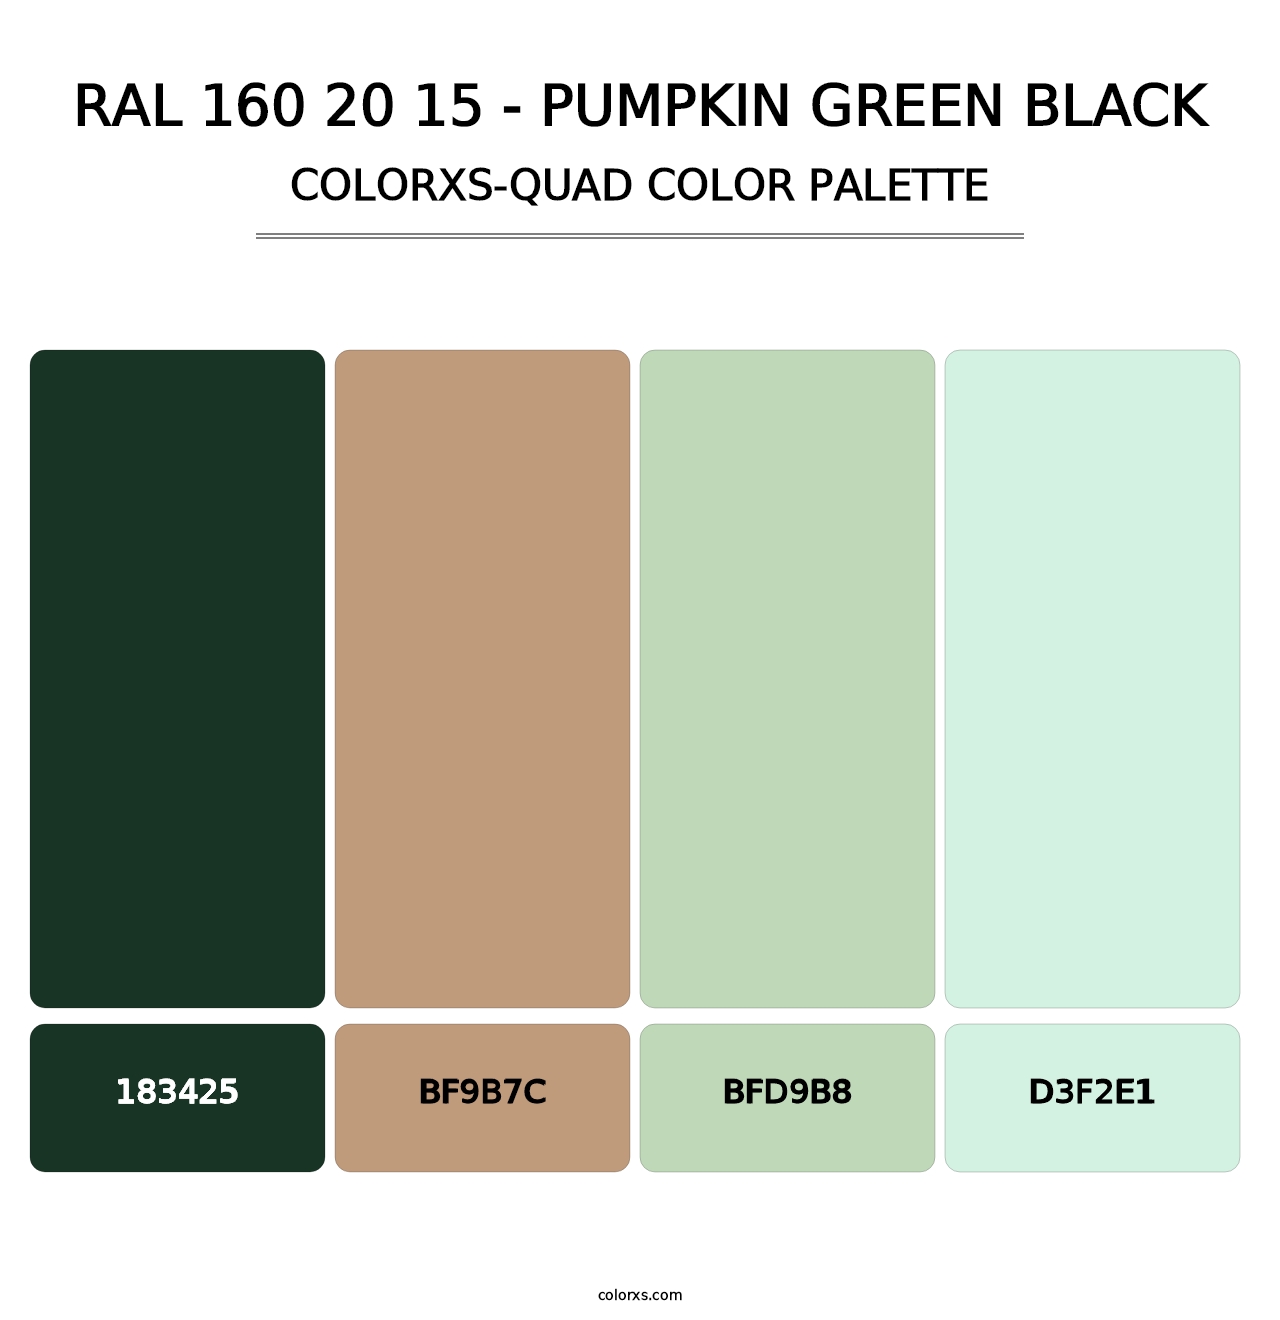 RAL 160 20 15 - Pumpkin Green Black - Colorxs Quad Palette